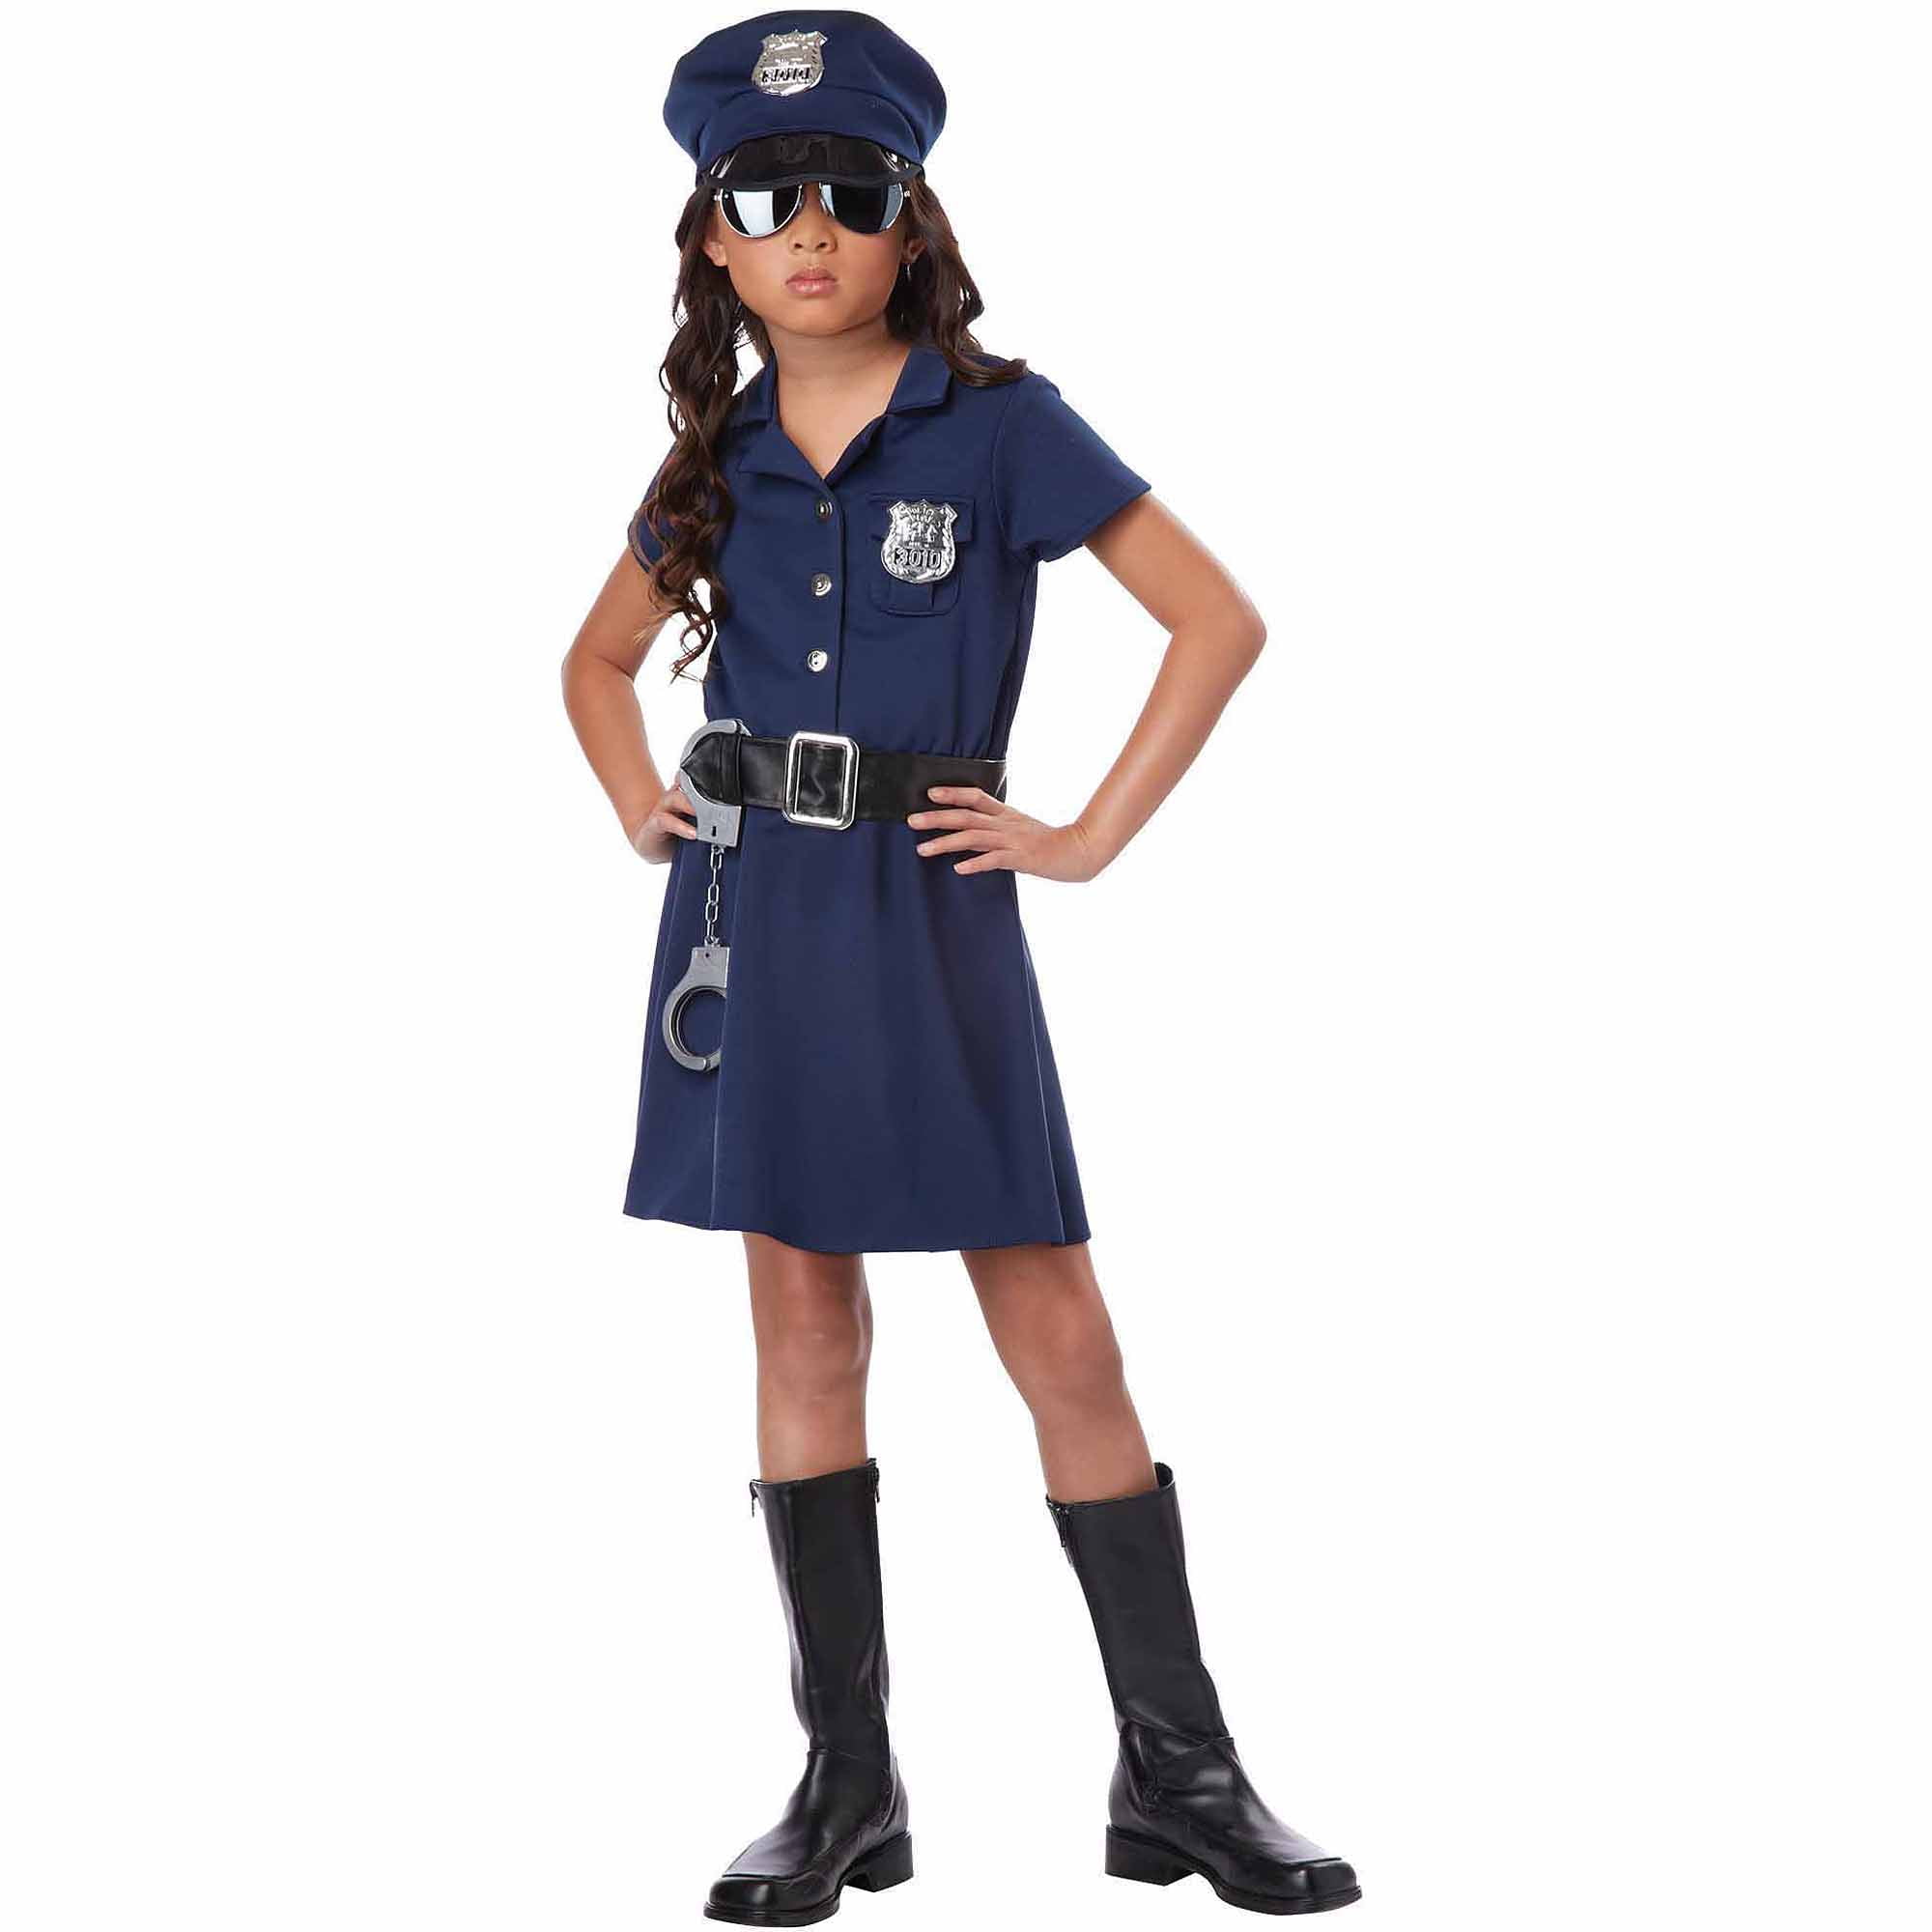 Police Officer Child Halloween Costume - Walmart.com